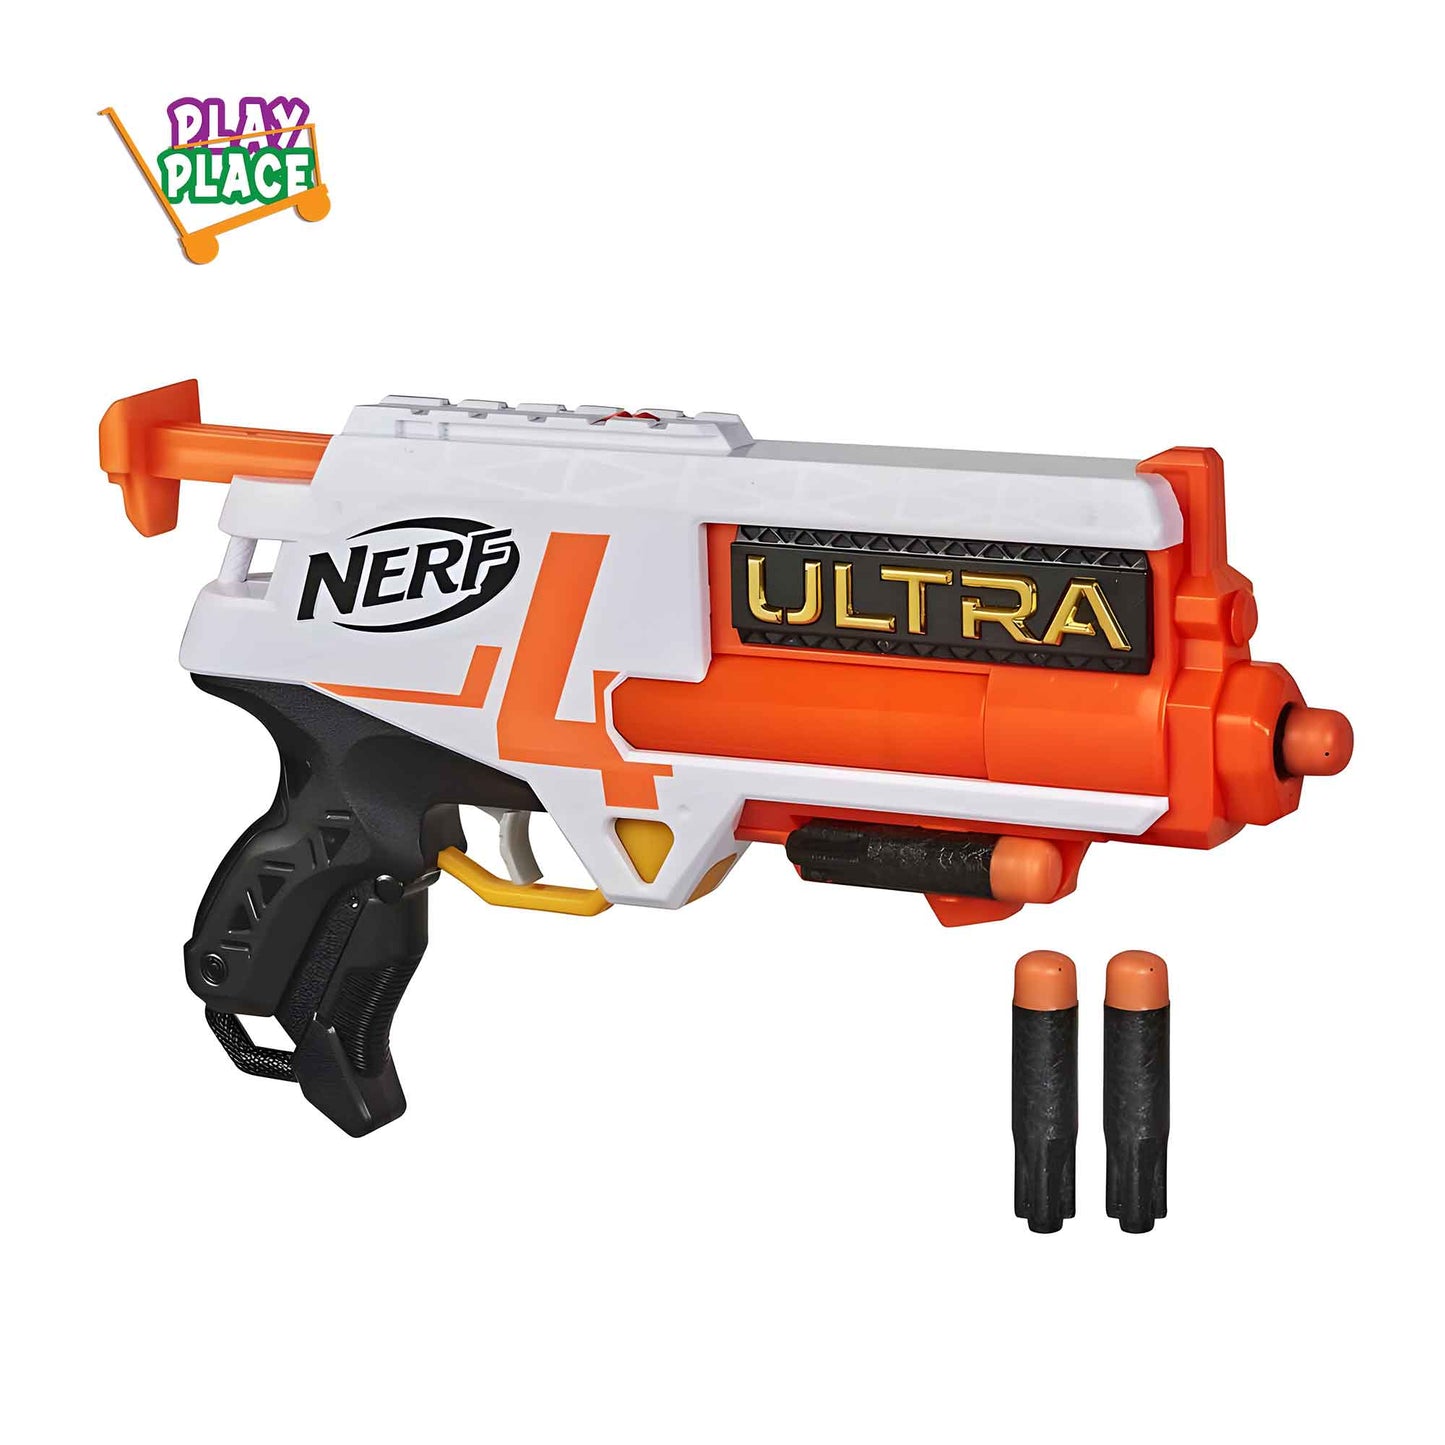 NERF Ultra Four Blaster Toy Gun